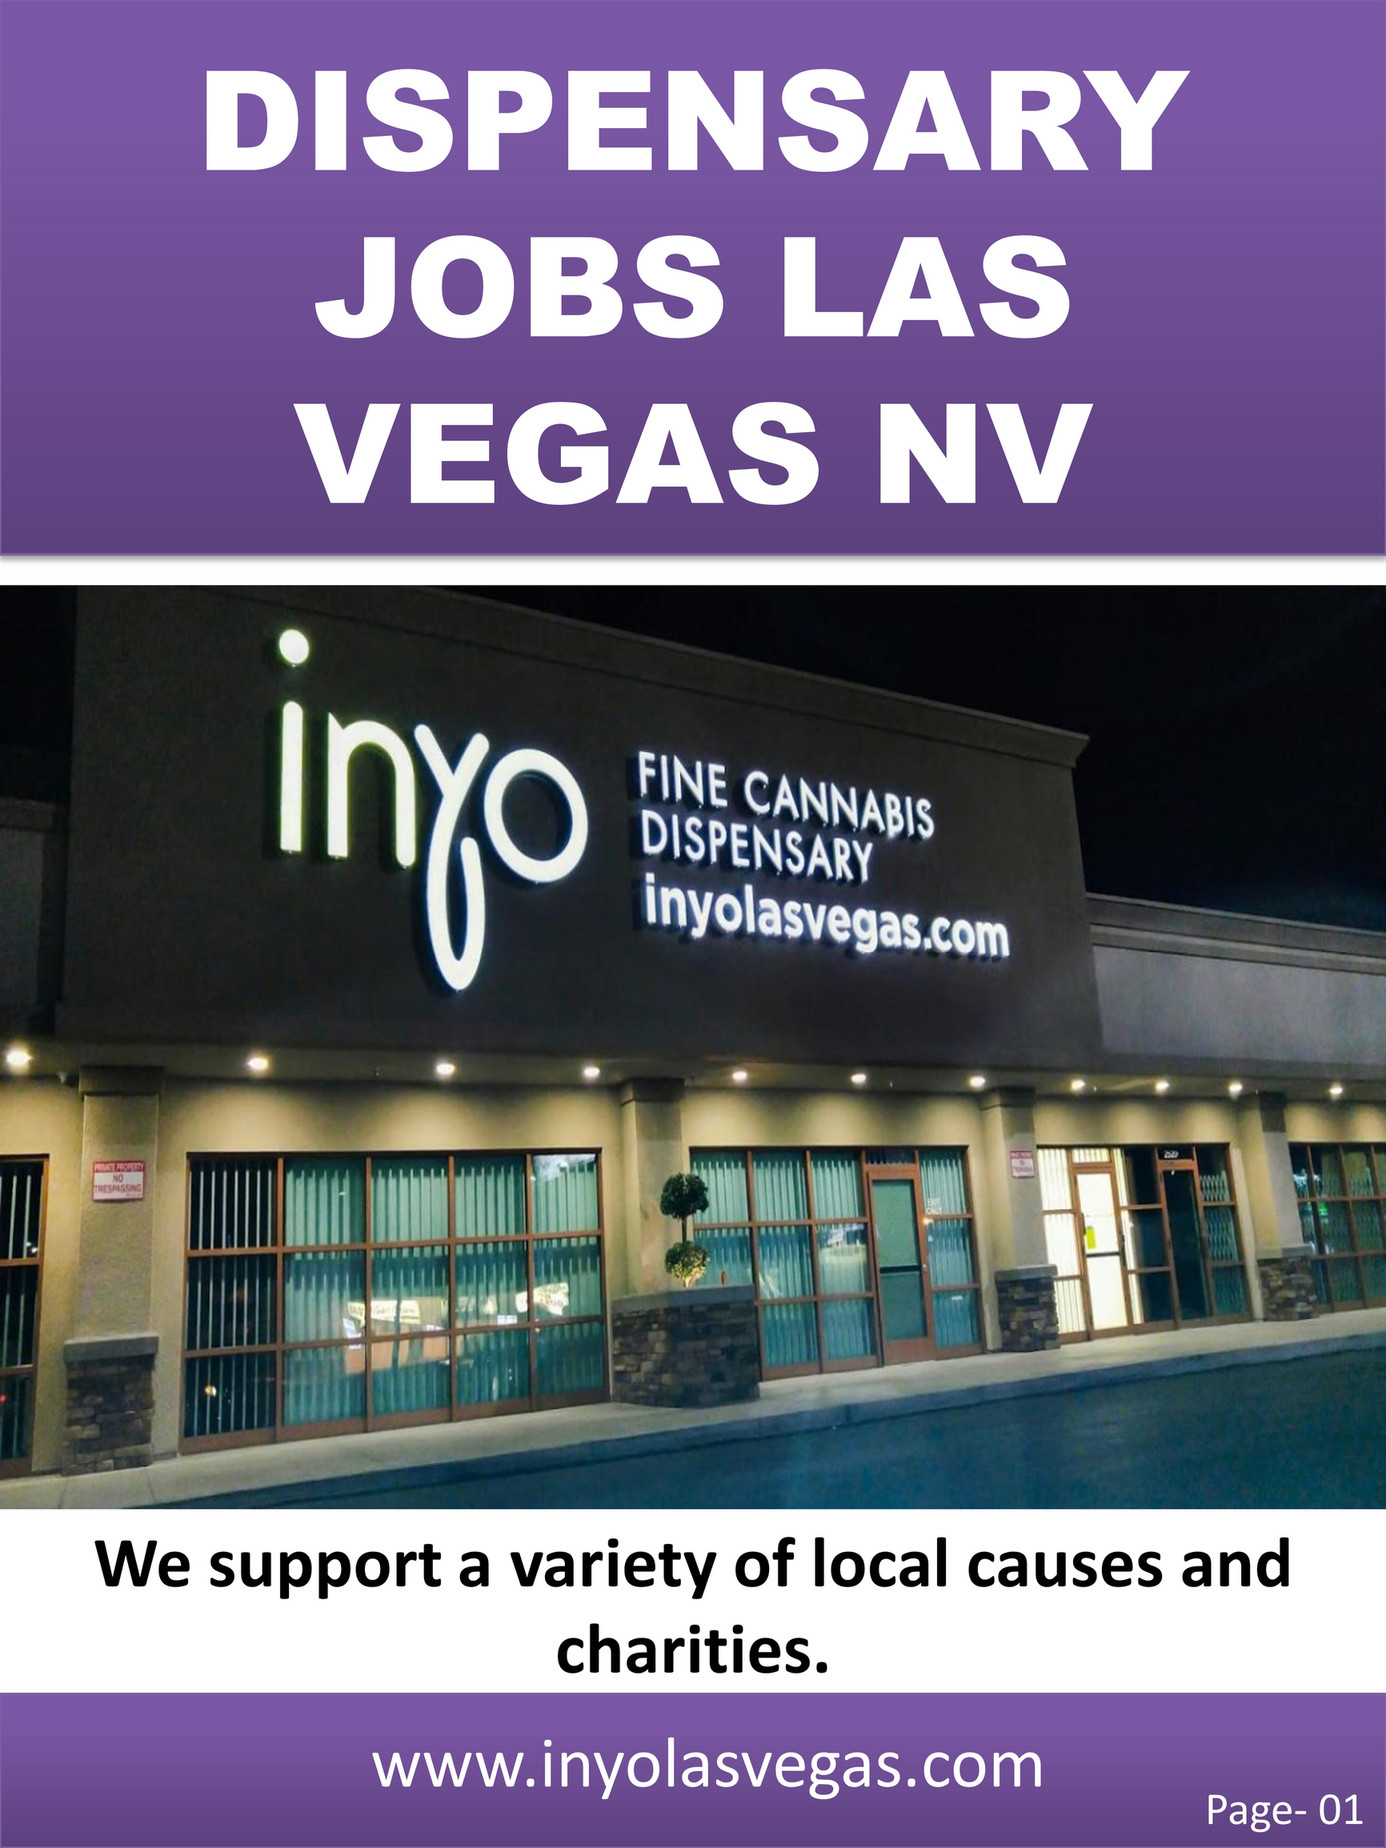 Inyo Fine Cannabis Dispensary - Buy Recreational Weed Las Vegas - Page